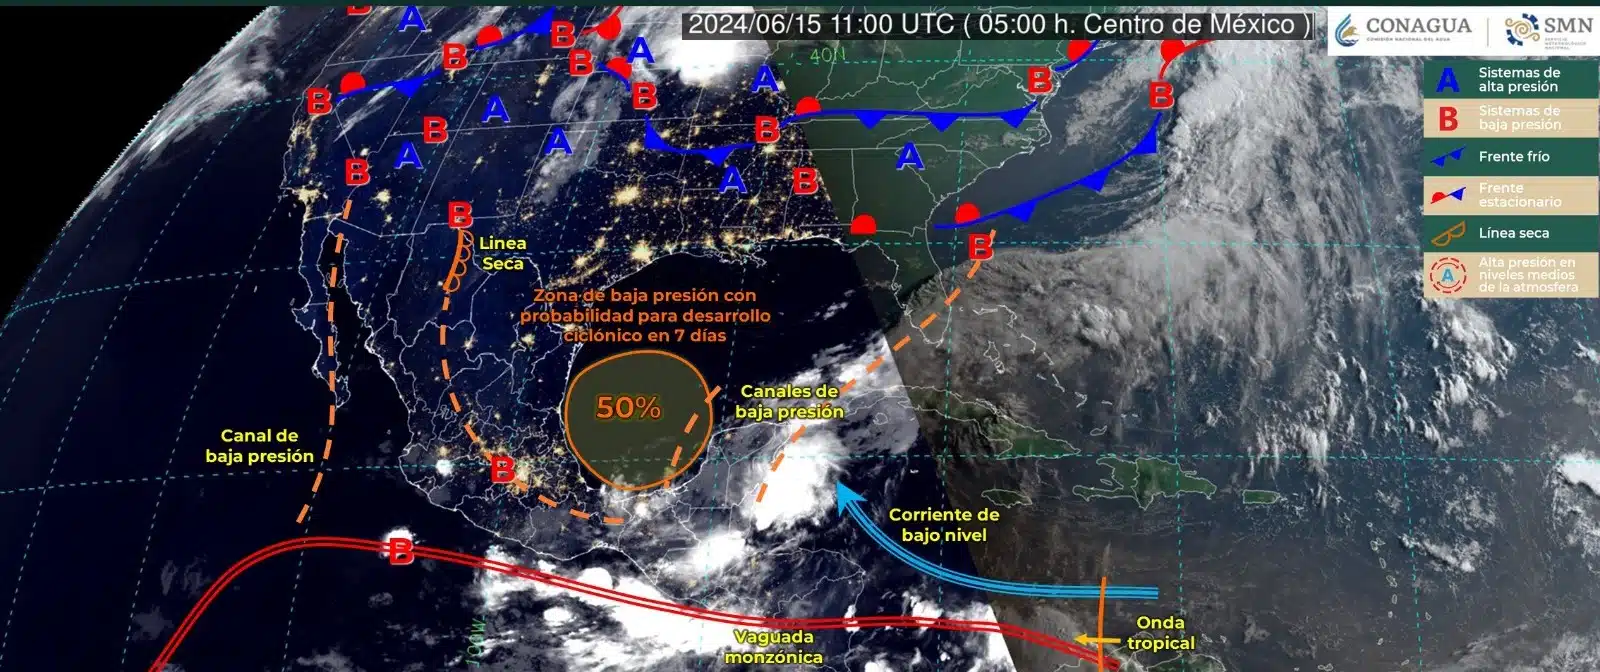 clima imagen satelital 15 de junio